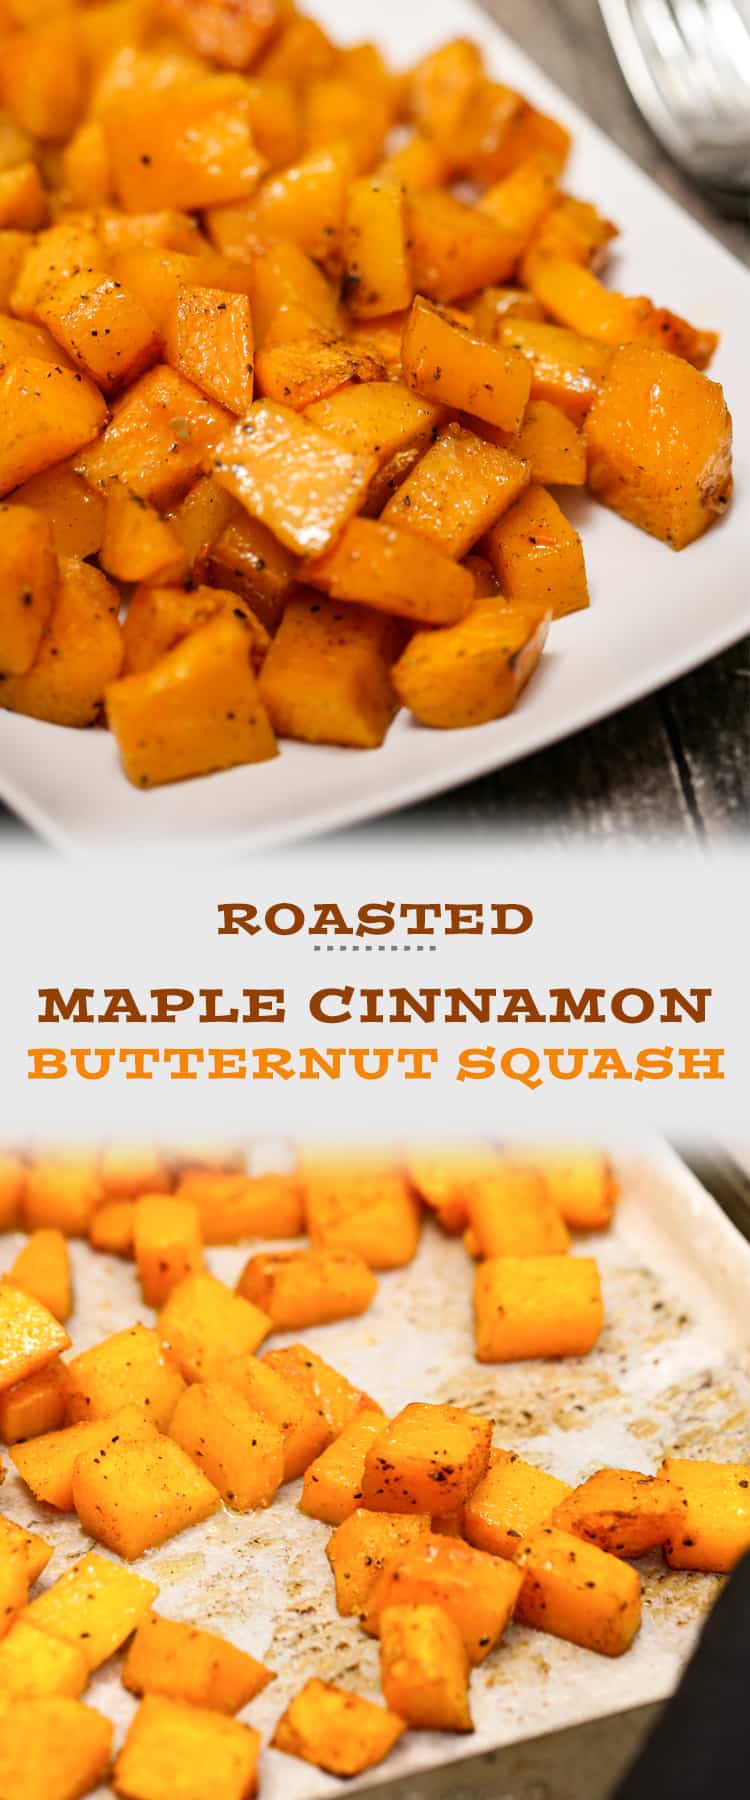 Roasted Maple Cinnamon Butternut Squash